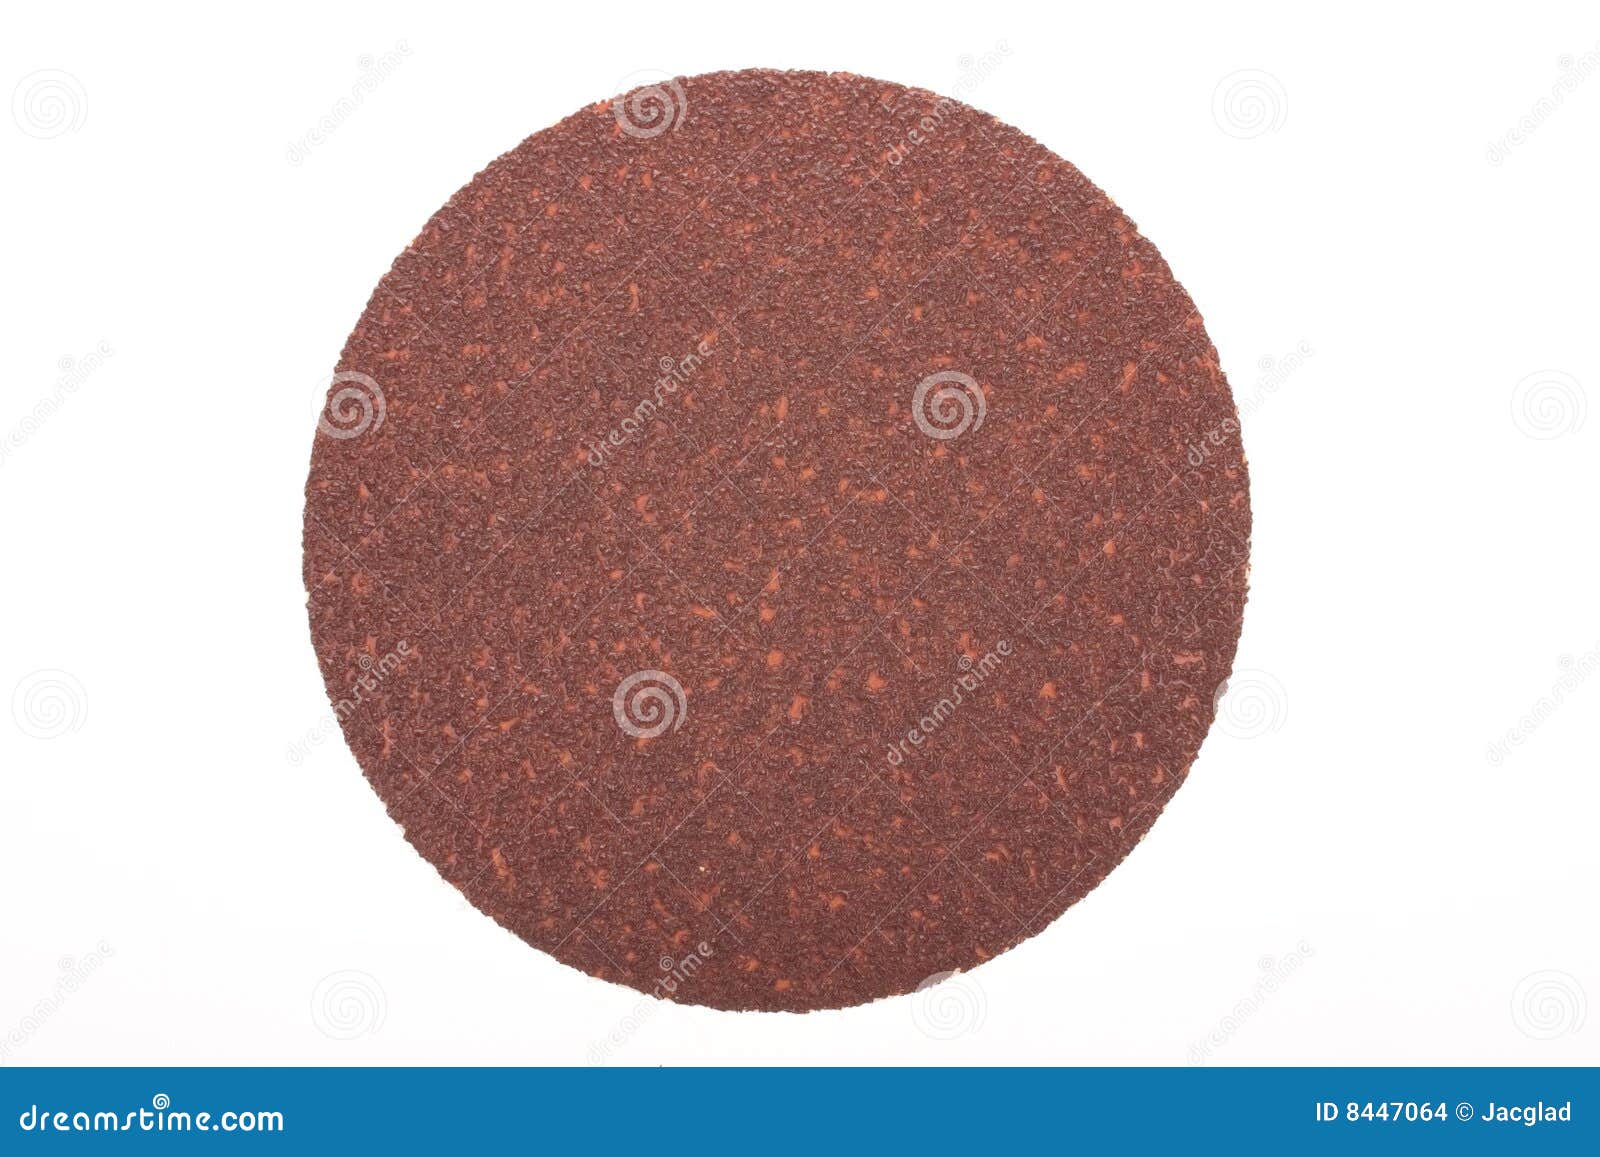 disk of brown sandpaper